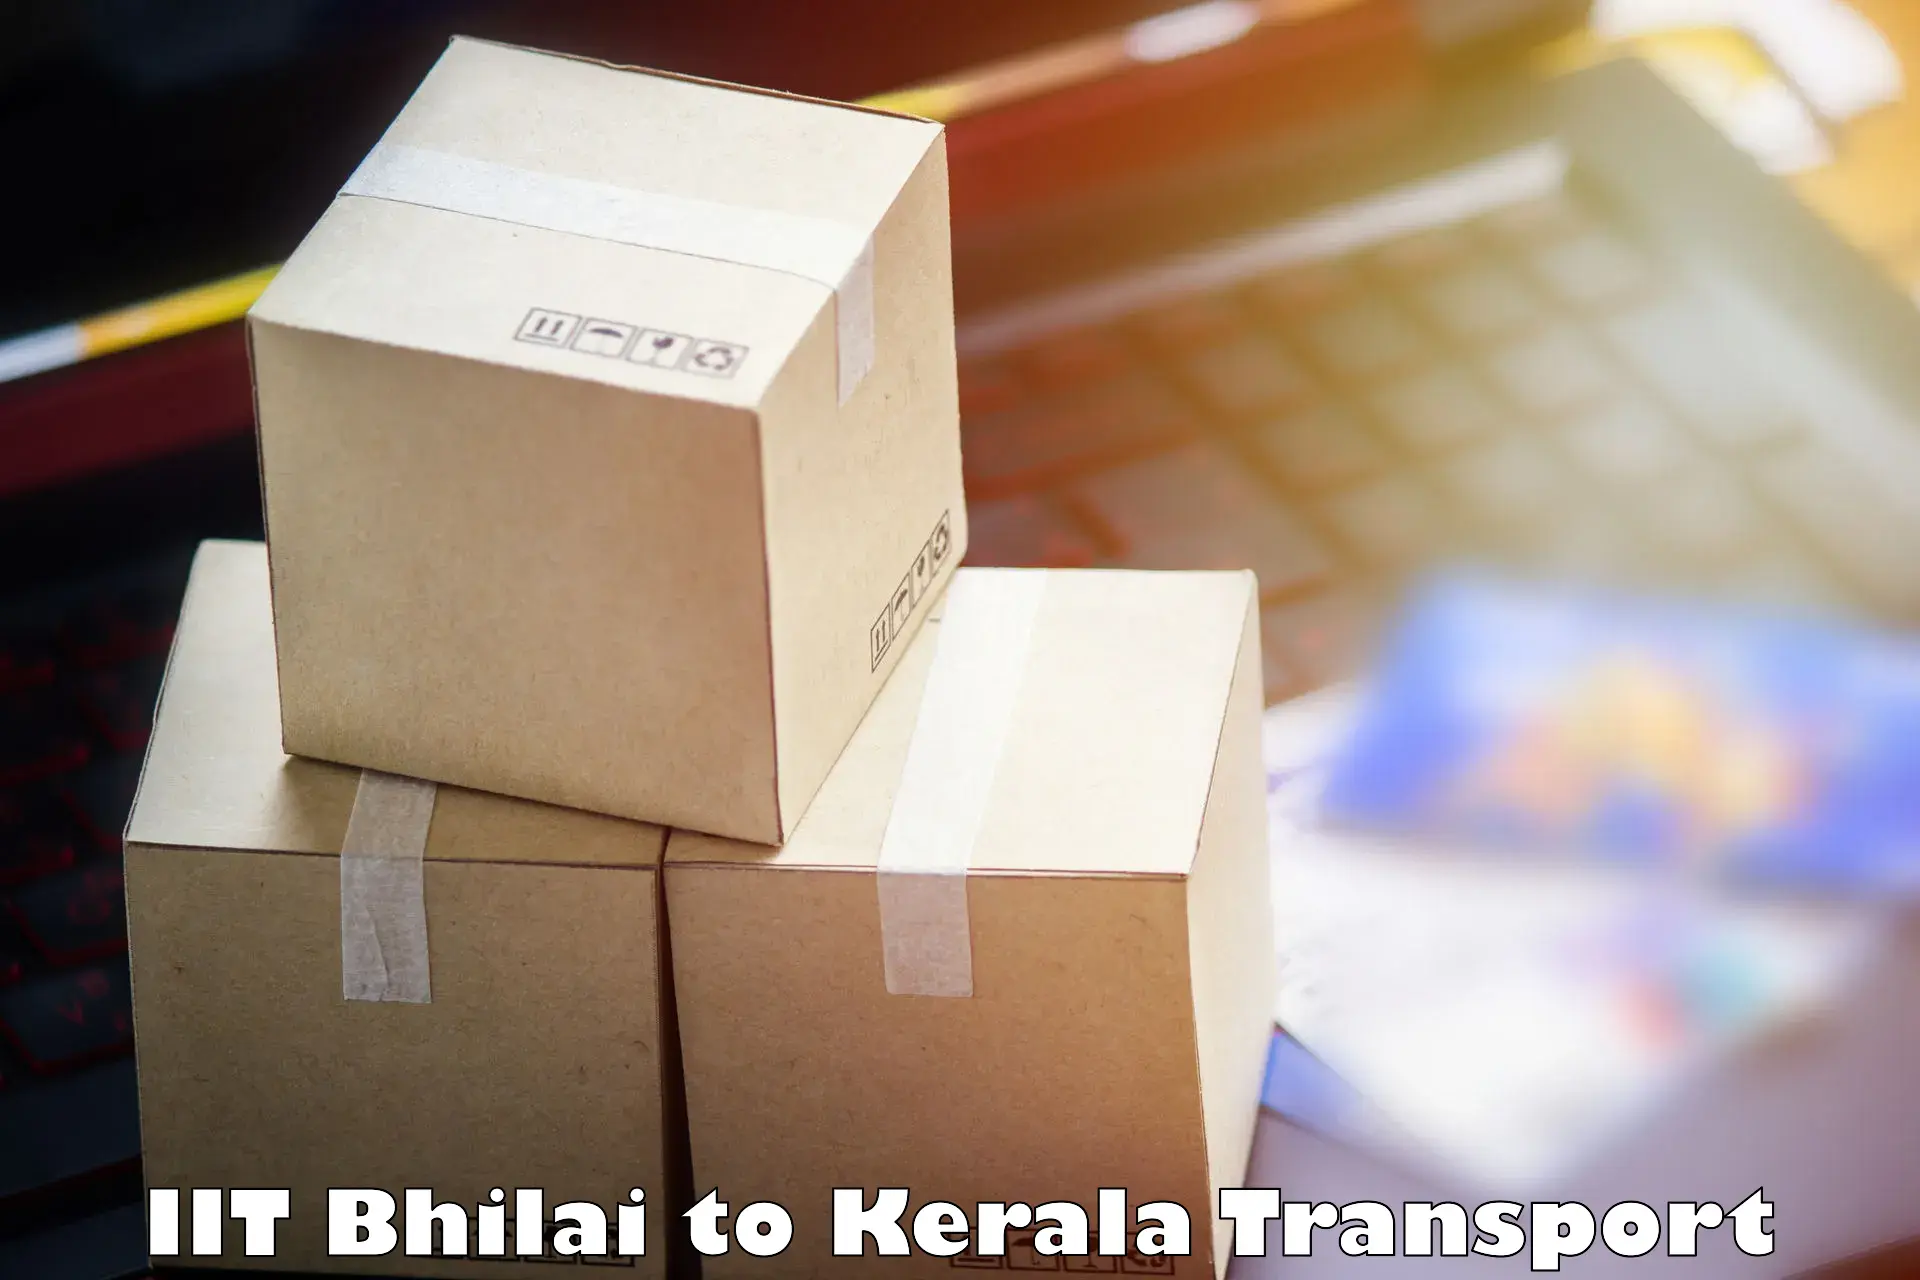 Daily transport service IIT Bhilai to Chavara